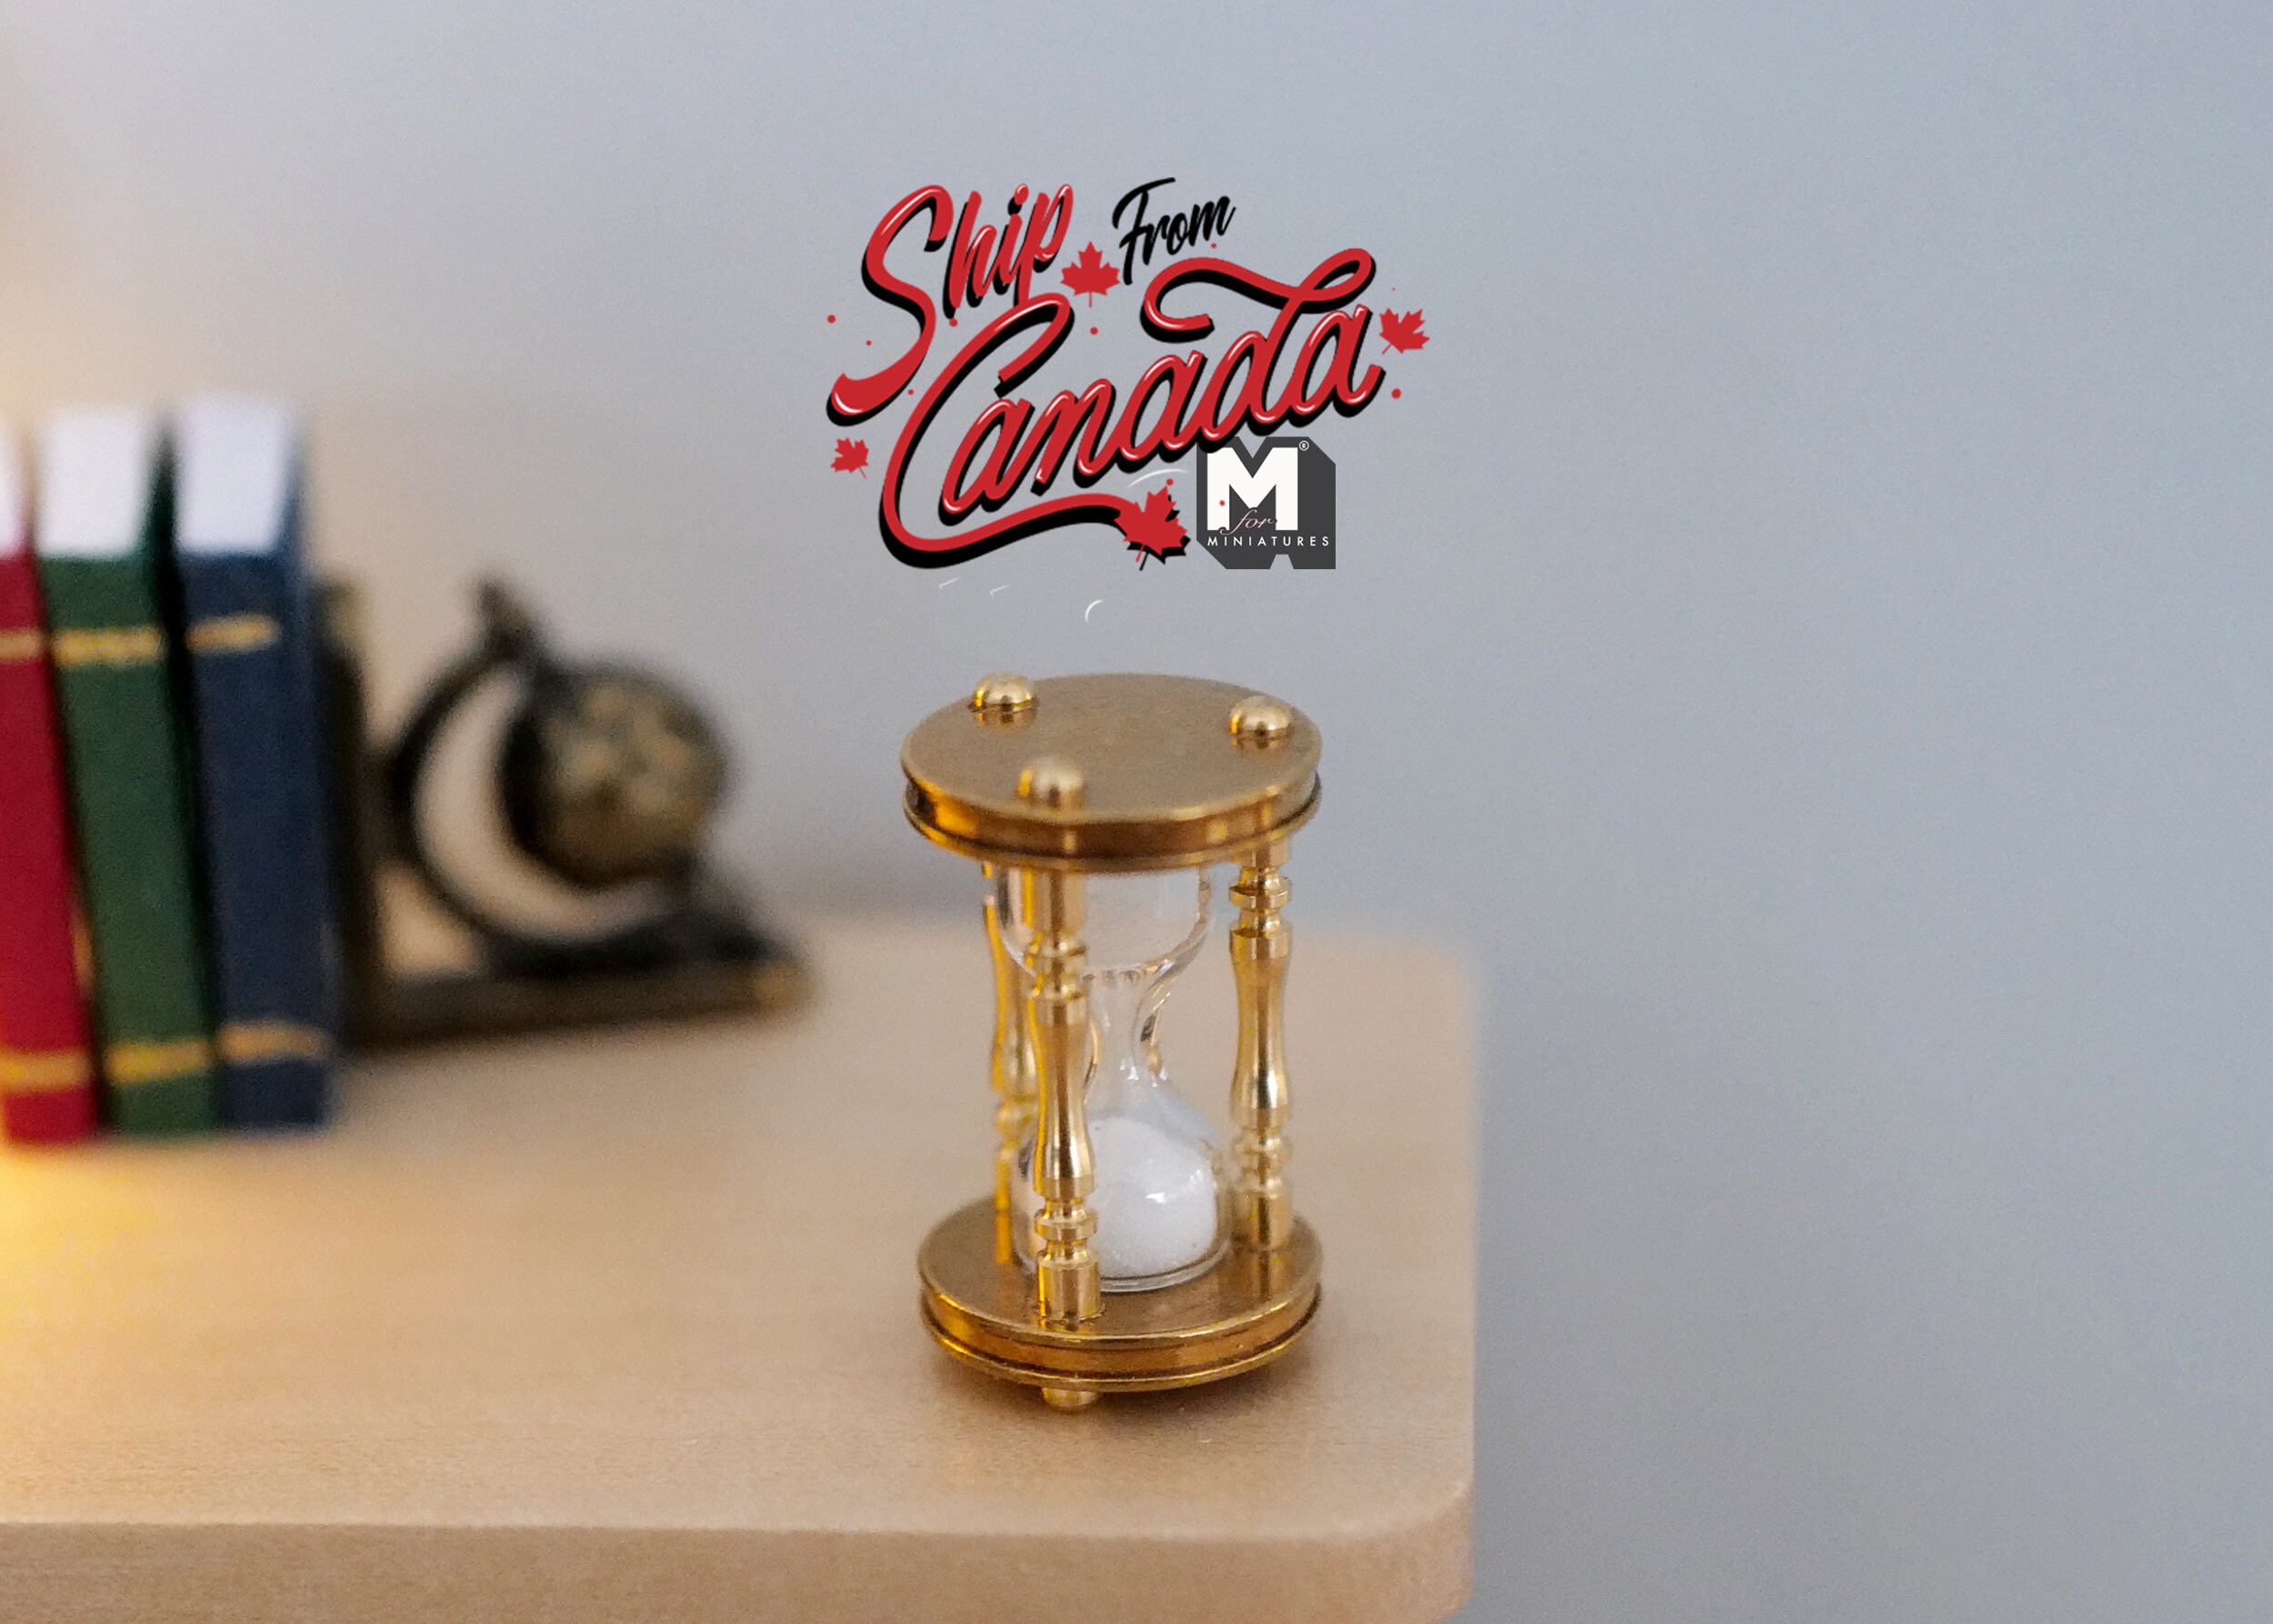 1/12 Scale Dollhouse Miniature Decorative Brass Hourglass with Sand #WCKA298 